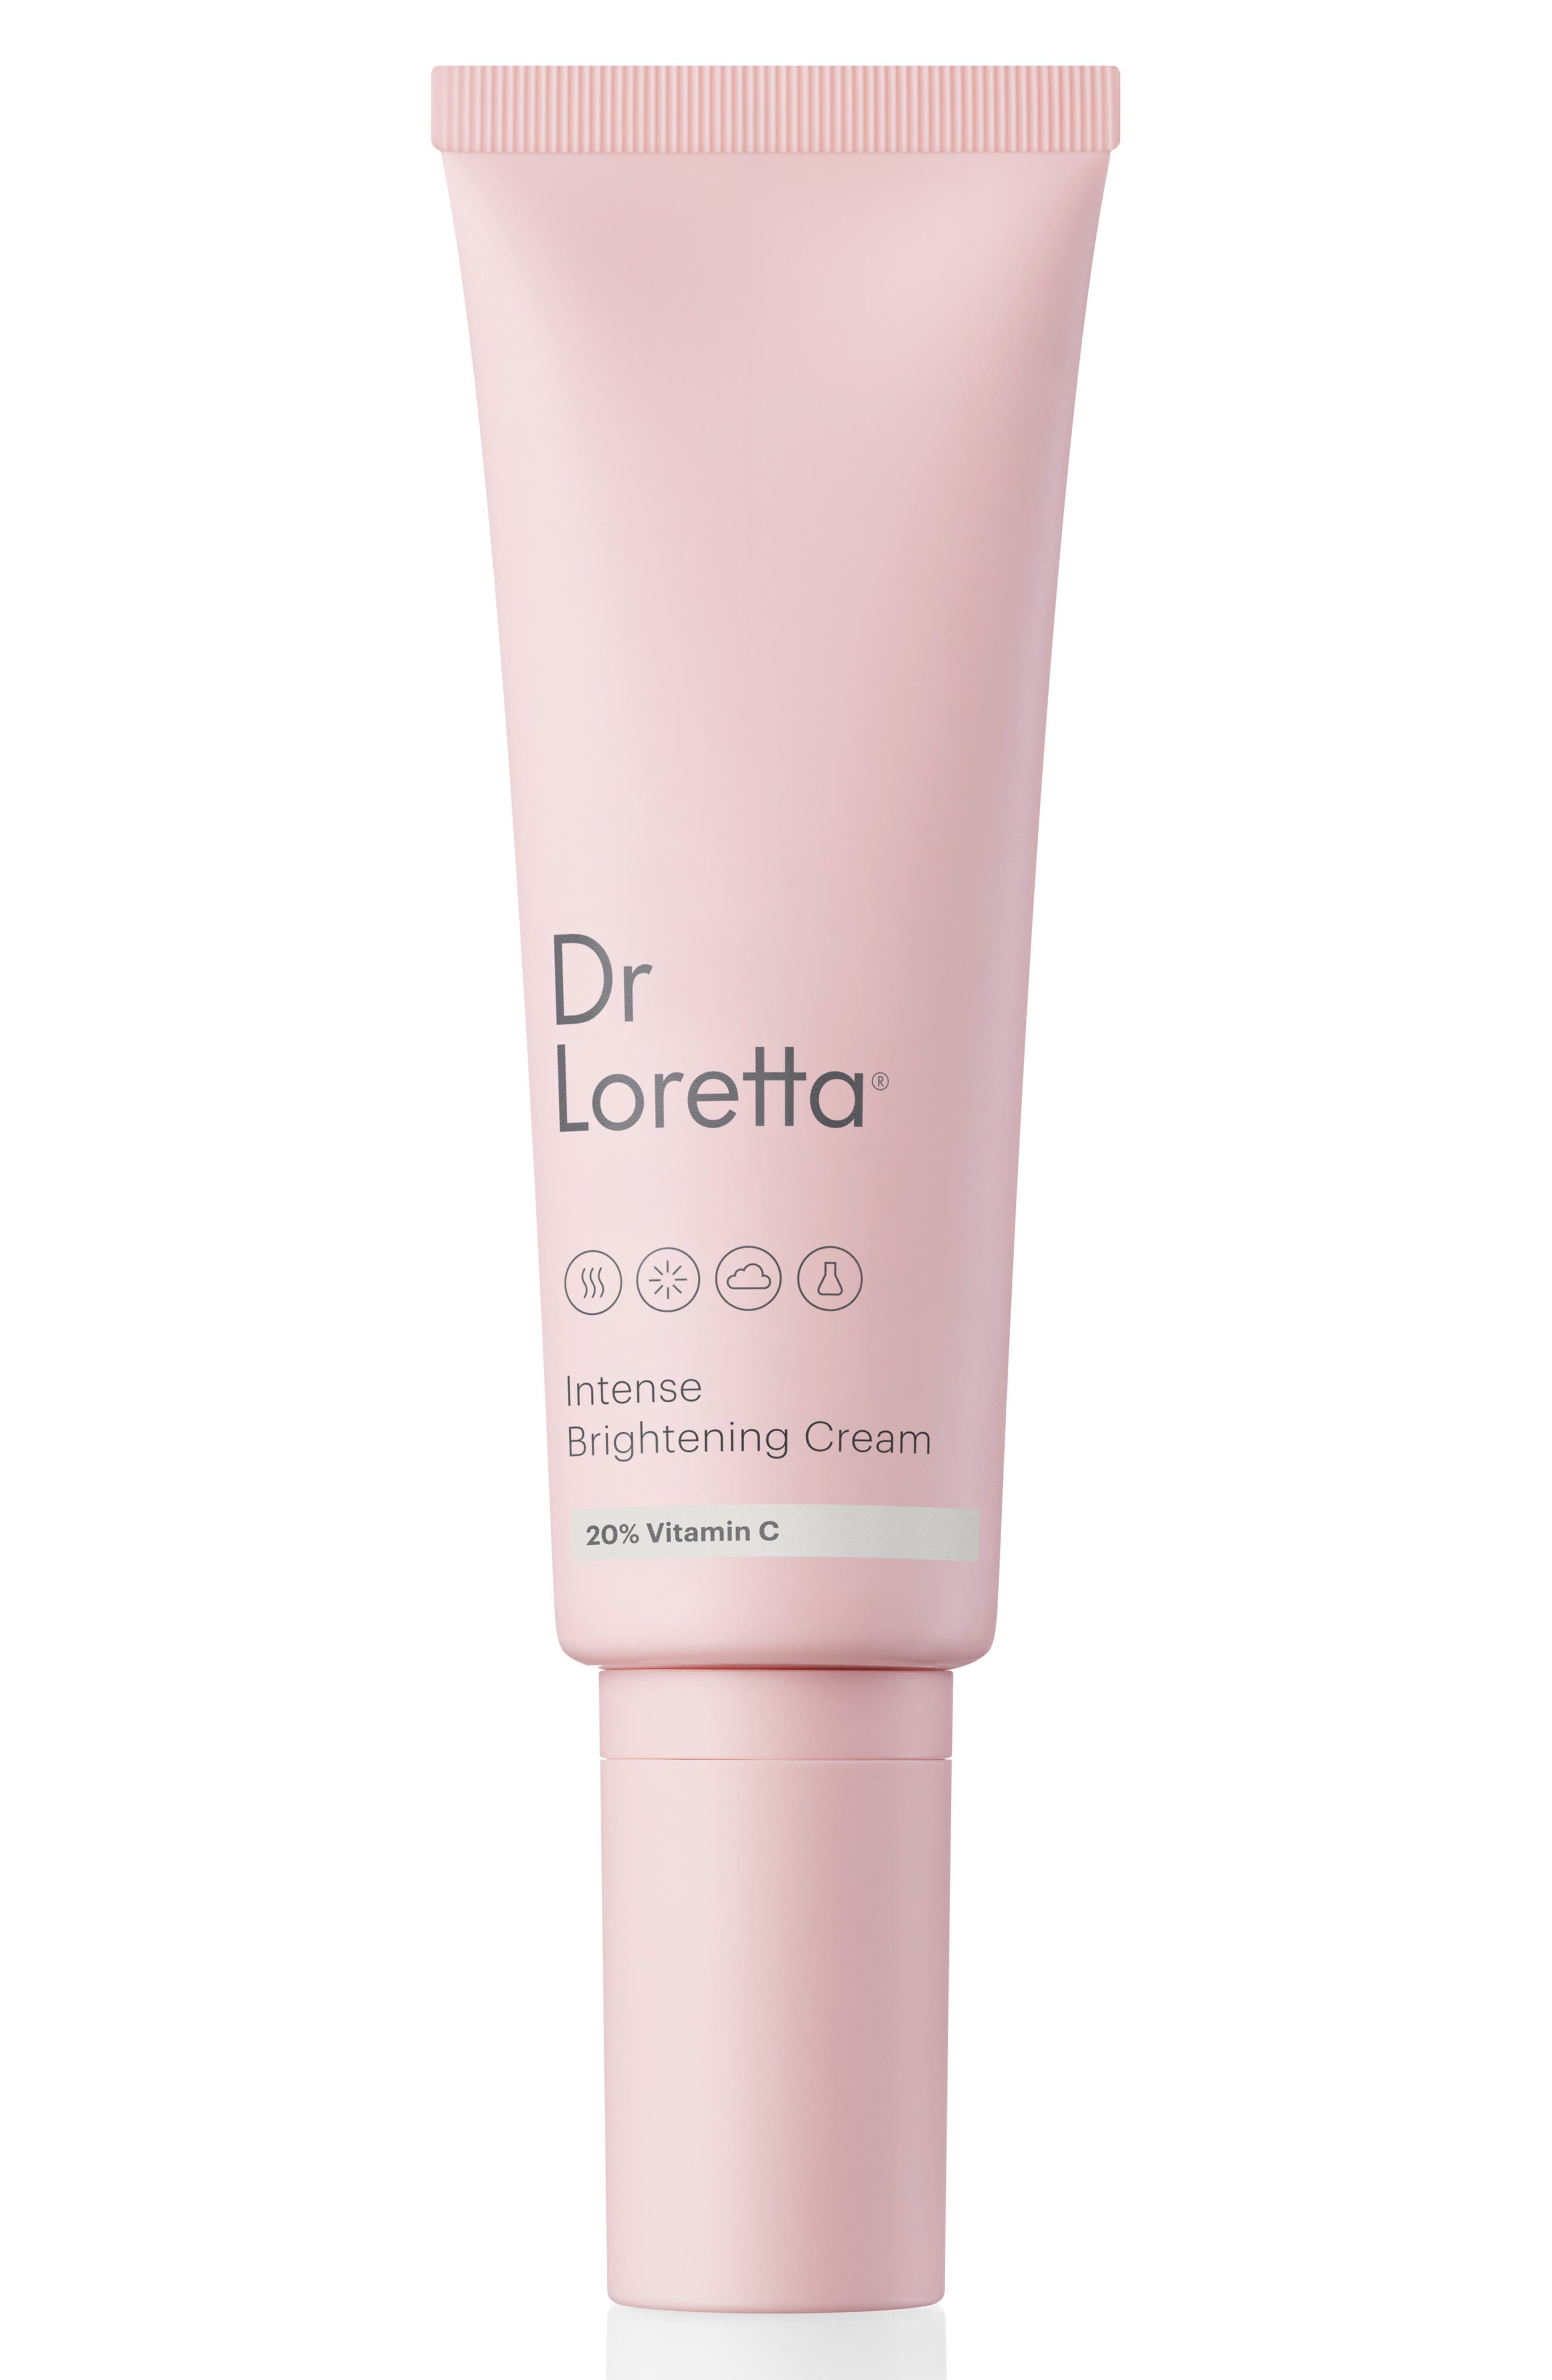 Dr. Loretta Intense Brightening Cream at Nordstrom